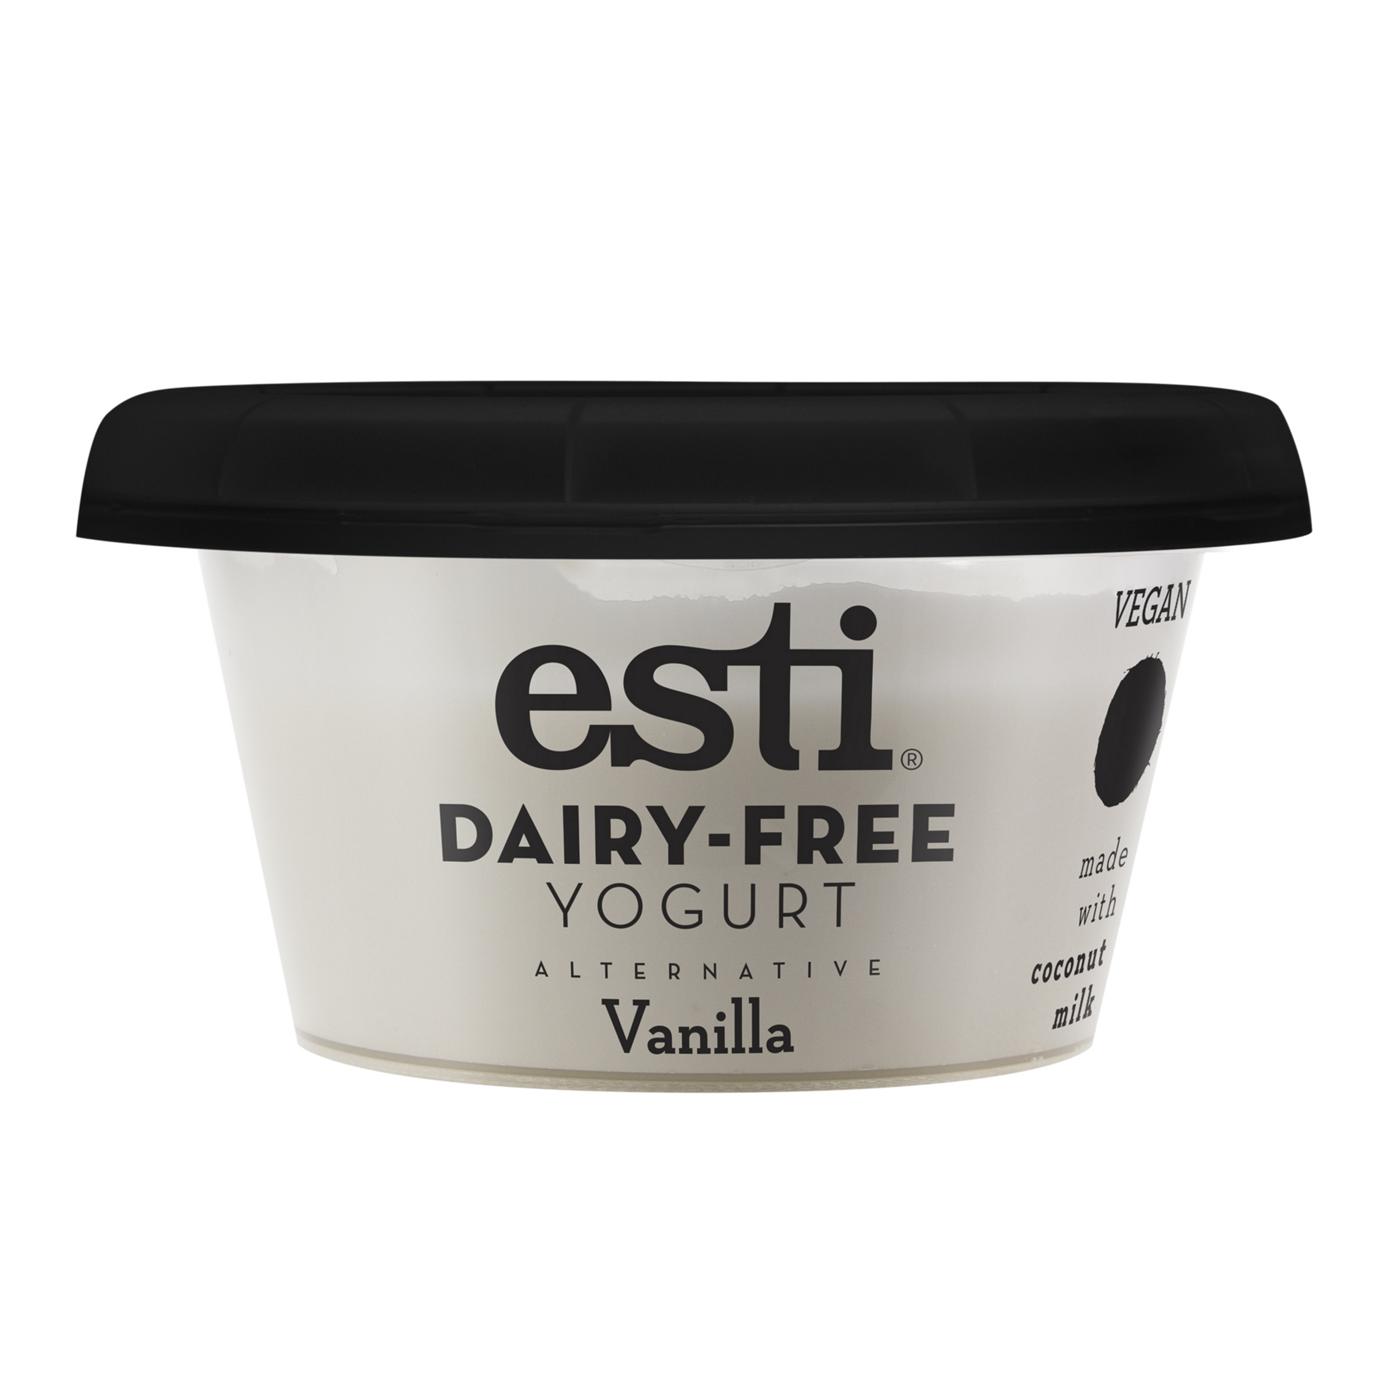 Esti Vanilla Dairy Free Yogurt Alternative; image 1 of 2